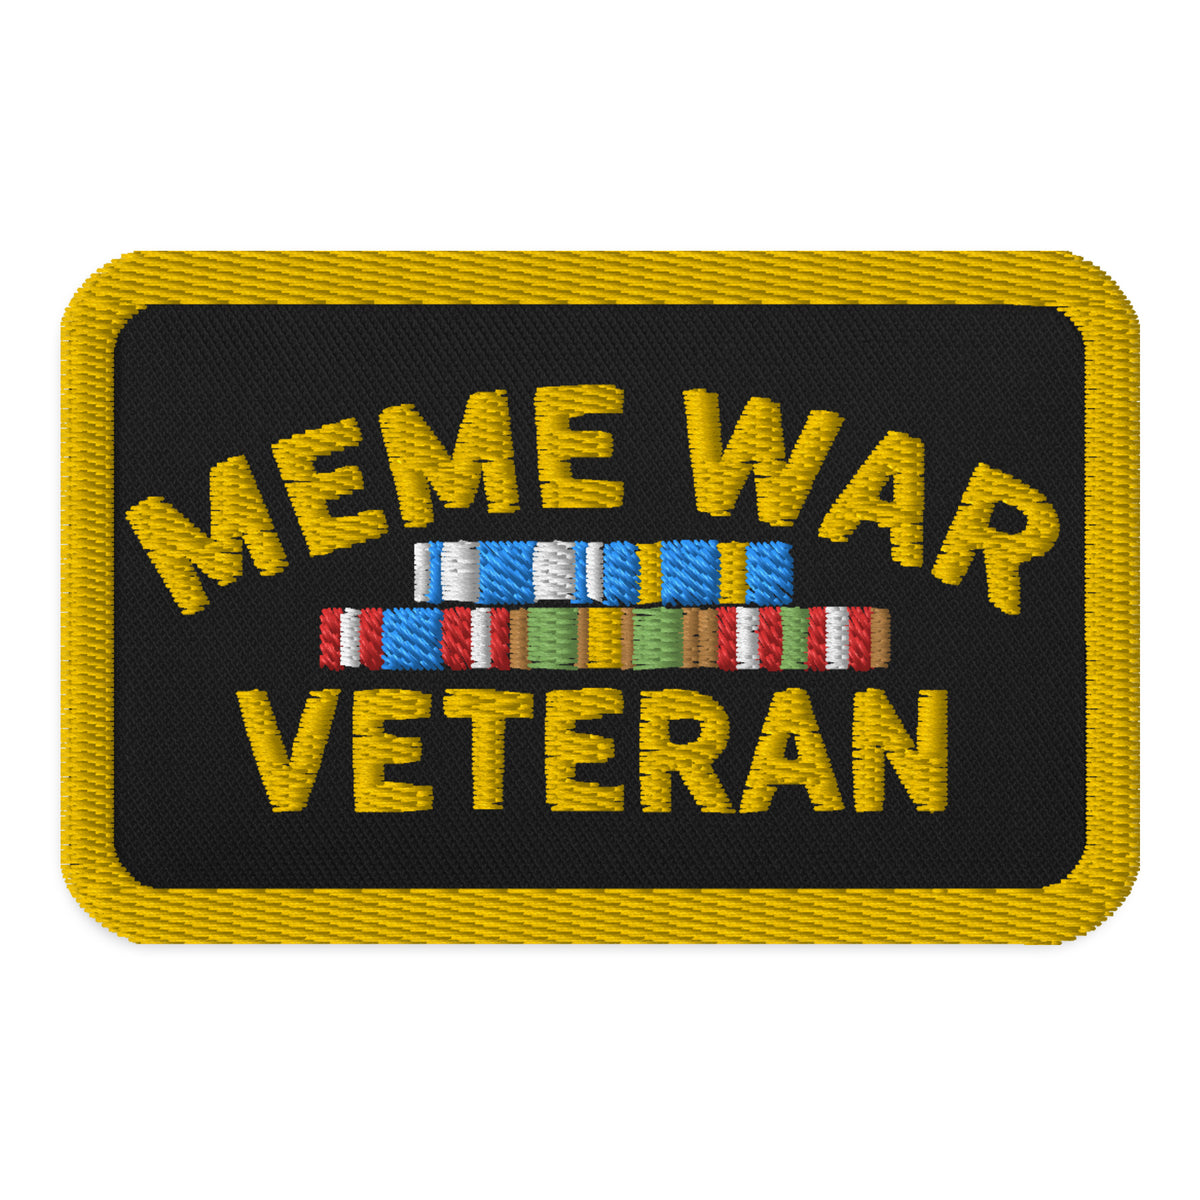 Meme War Veteran Embroidered Patch